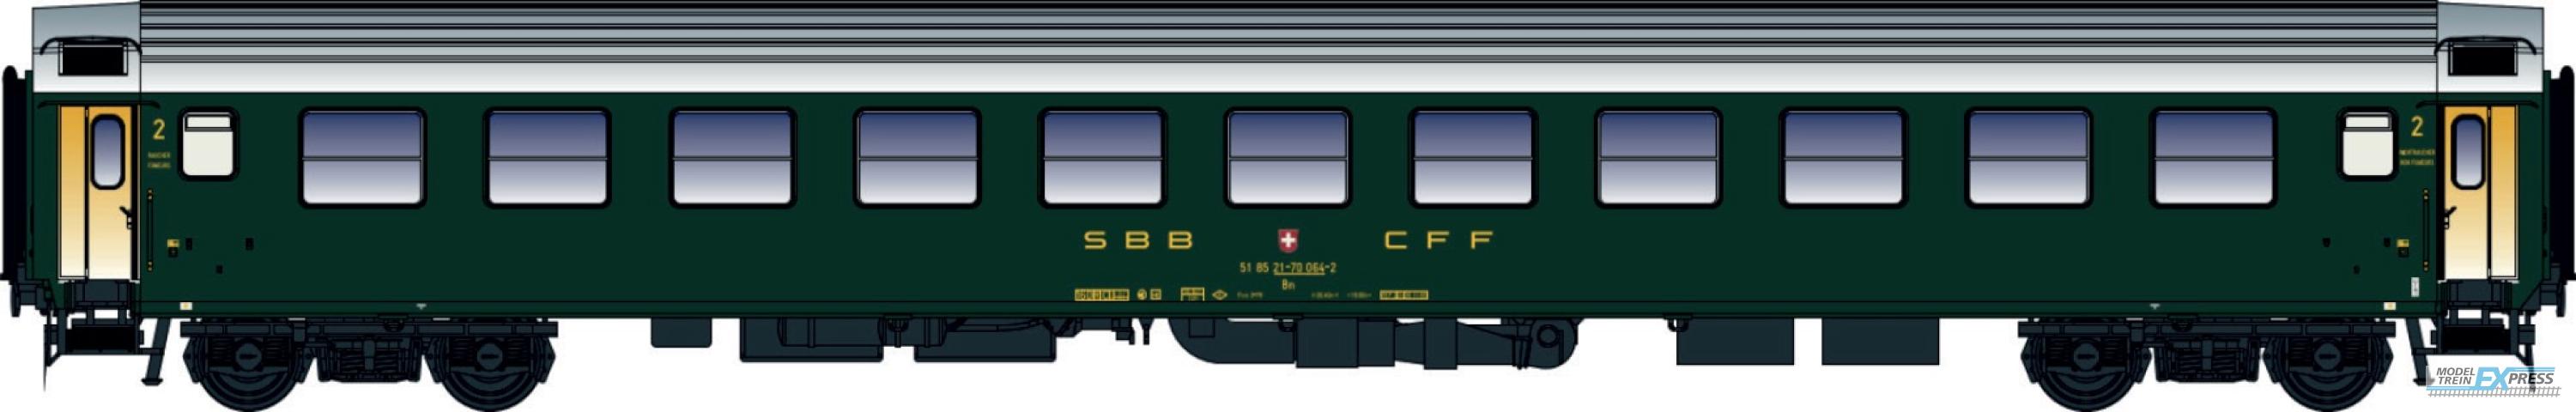 LS Models 472011 Bm, groen, oude logo, 11 coupés  /  Ep. IV  /  SBB  /  HO  /  DC  /  1 P.